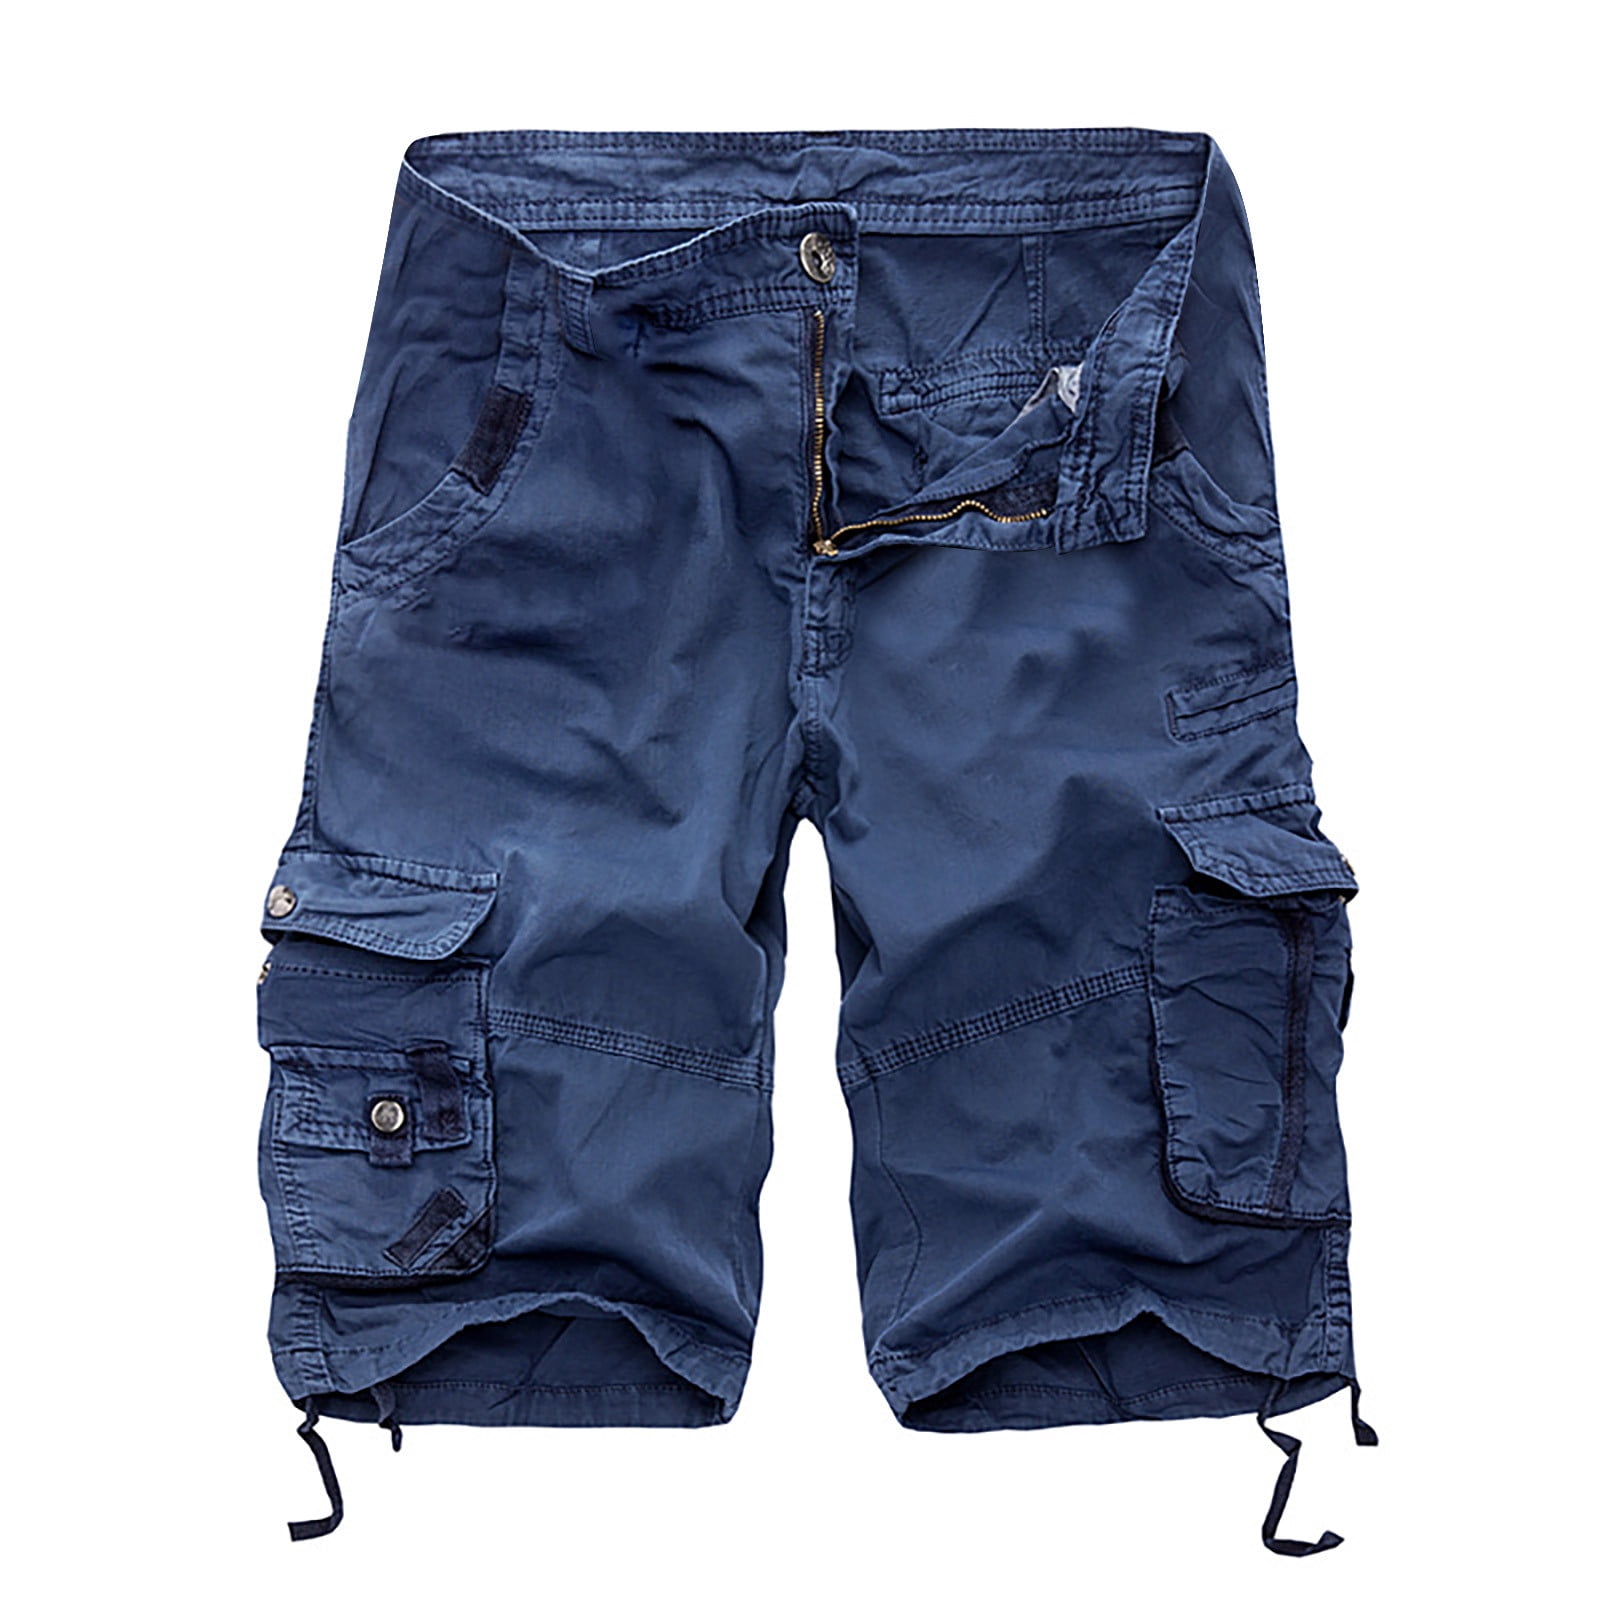 fartey Cargo Shorts for Men Casual Baggy Multi Pockets 5 Inch